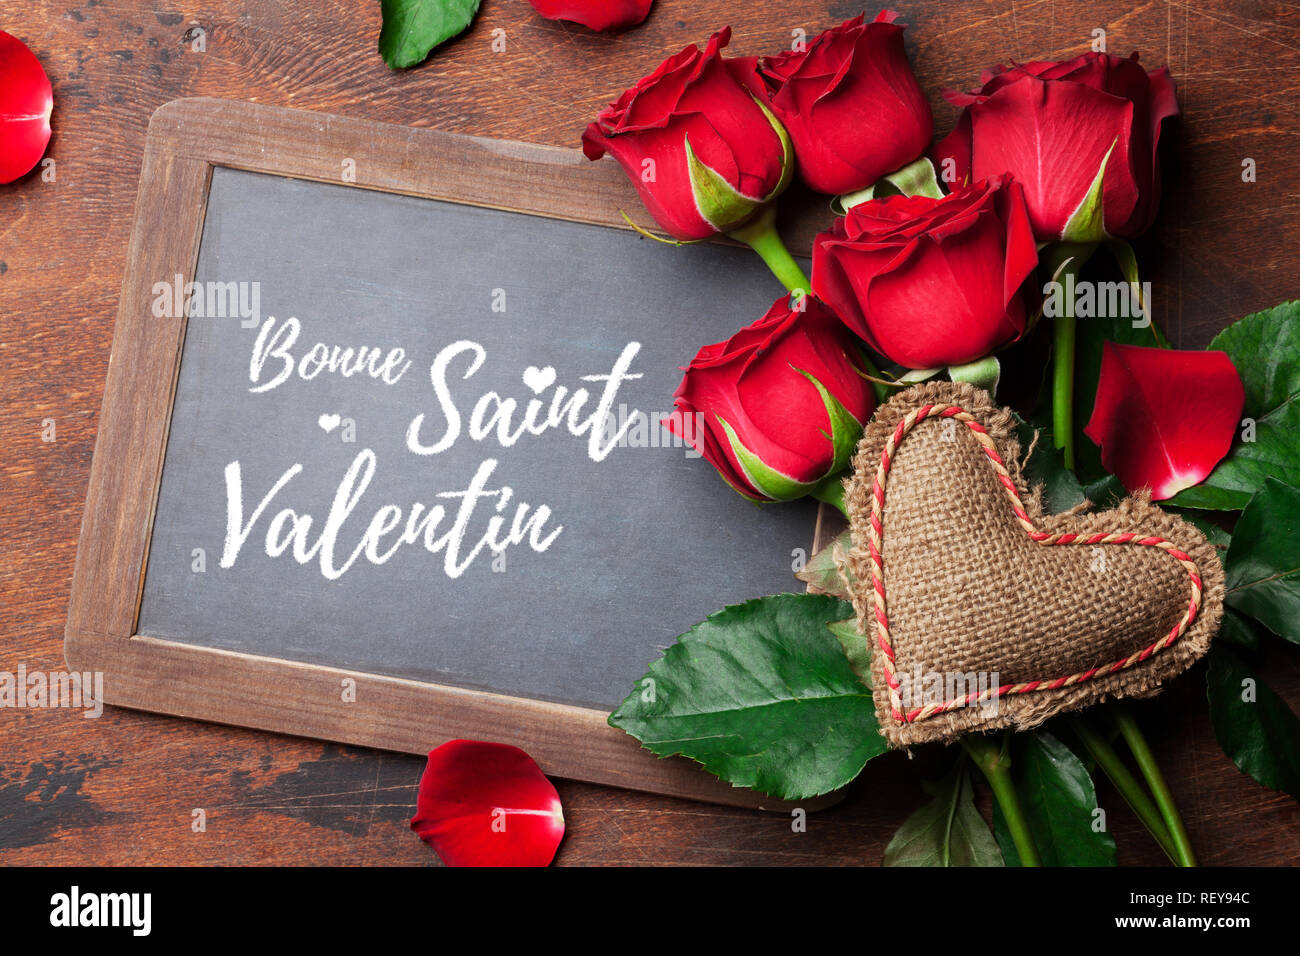 Bonne saint valentin hi-res stock photography and images - Alamy